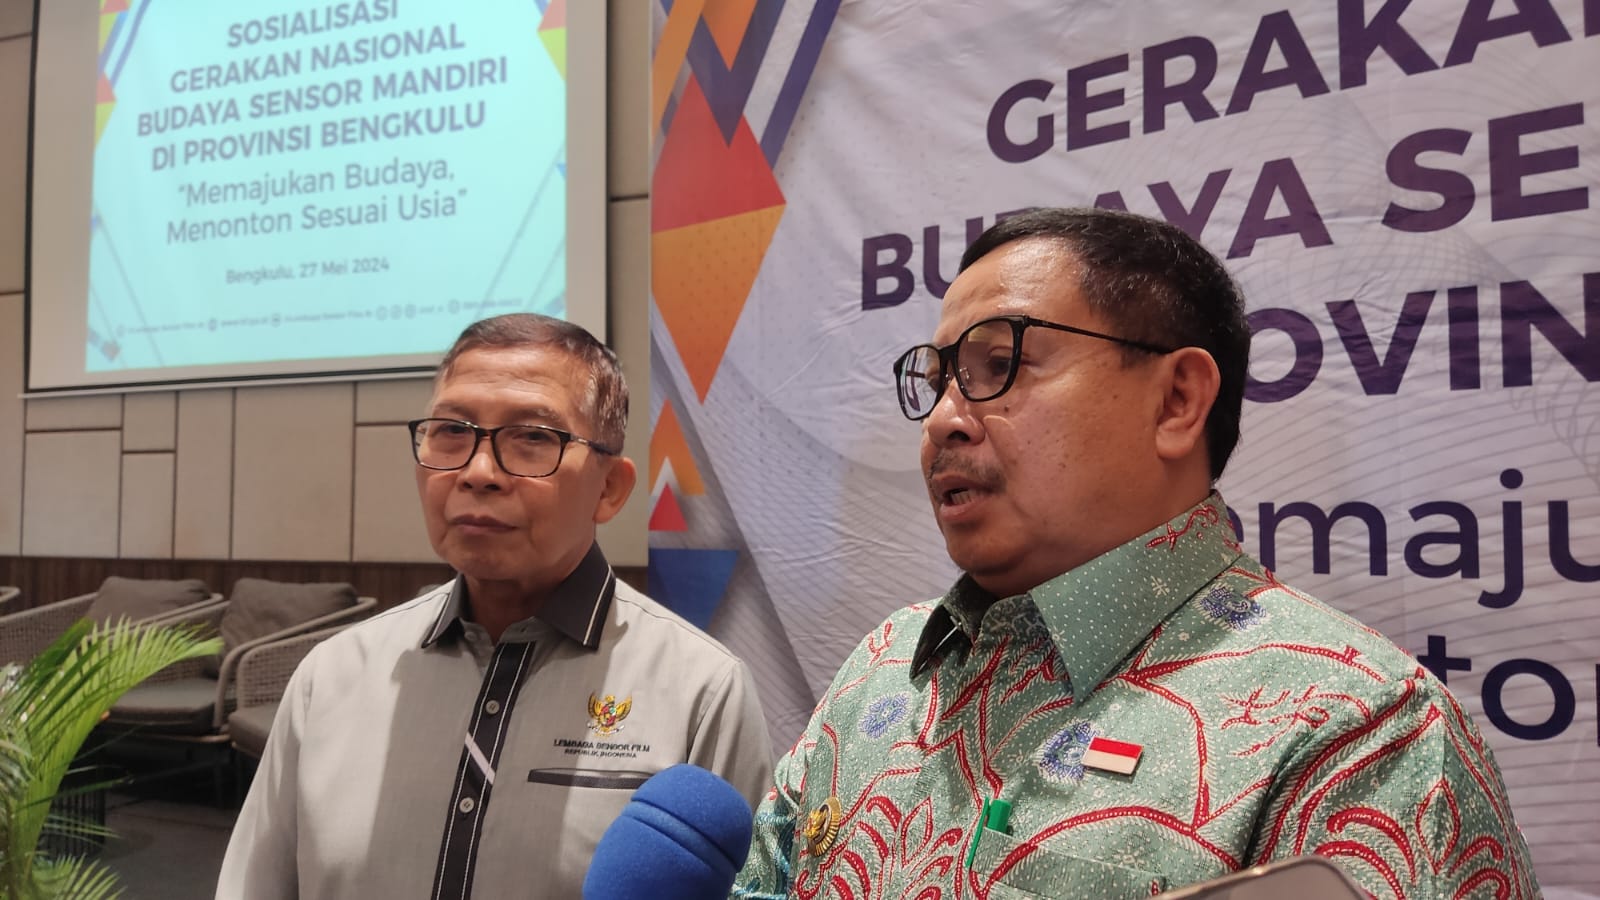 Sosialisasi Gerakan Nasional Budaya Sensor Mandiri di Provinsi Bengkulu, Agar Masyarakat Dapat Memilah Tontona